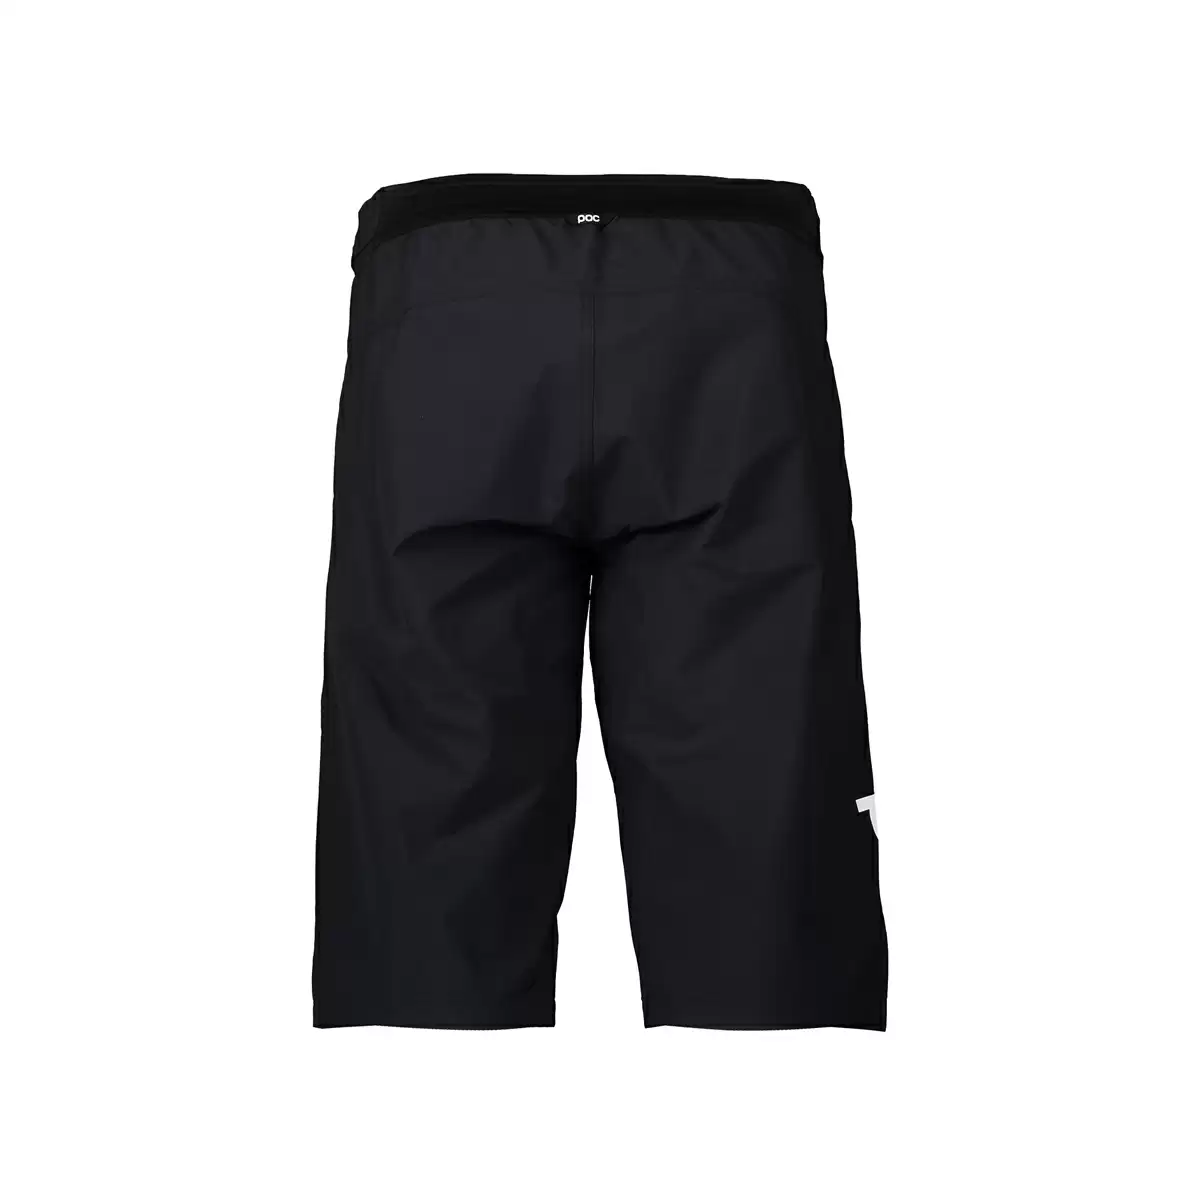 Essential Enduro Shorts black size XS #1